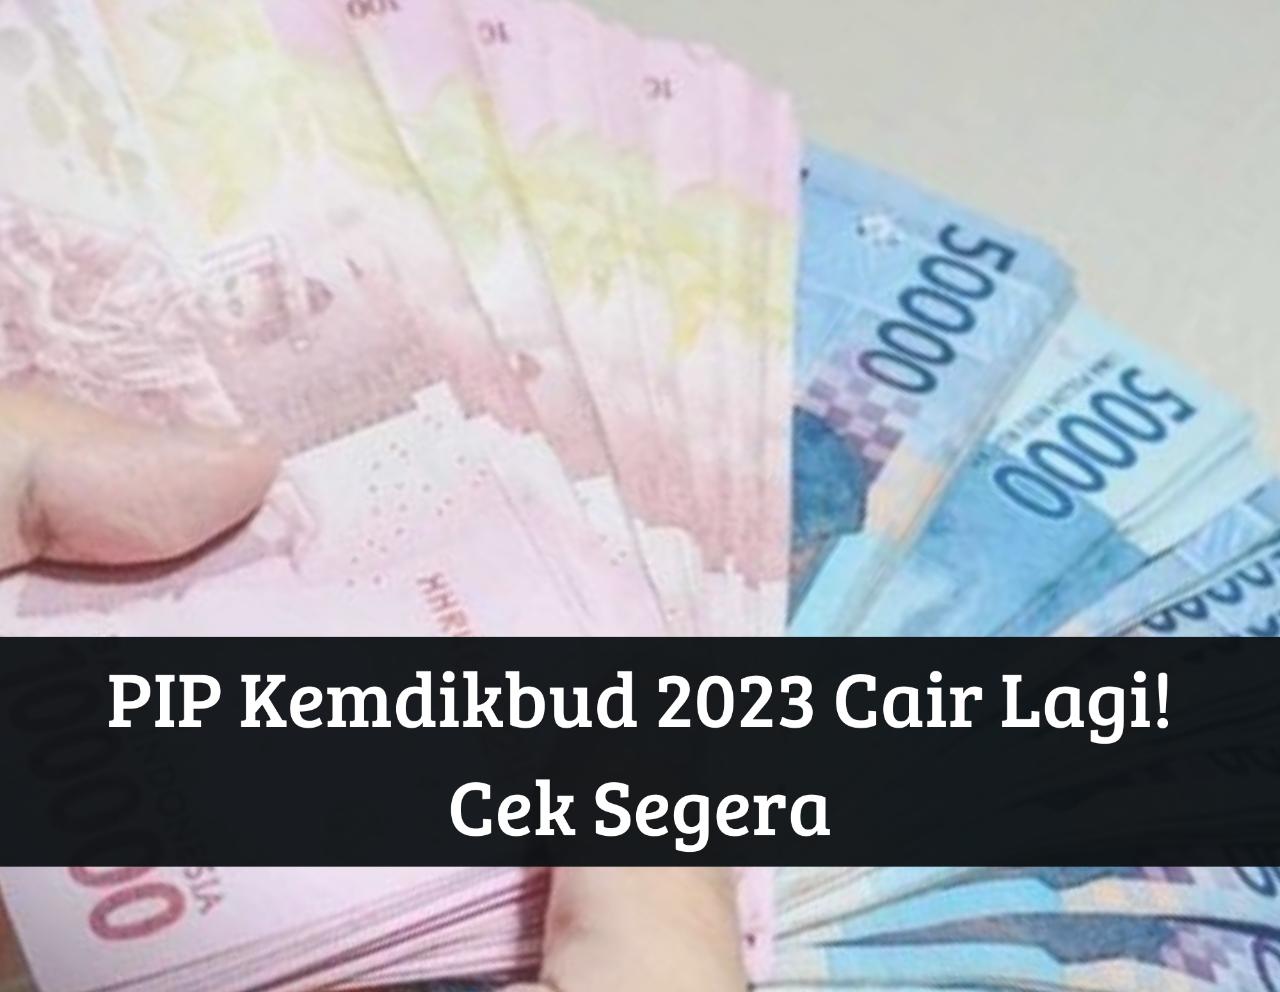 Tanpa Perlu KIP, Penerima Bansos PIP Kemdikbud 2023 Cair ke NIK NISN Ini, Segera Cek Link pip.kemdikbud.go.id